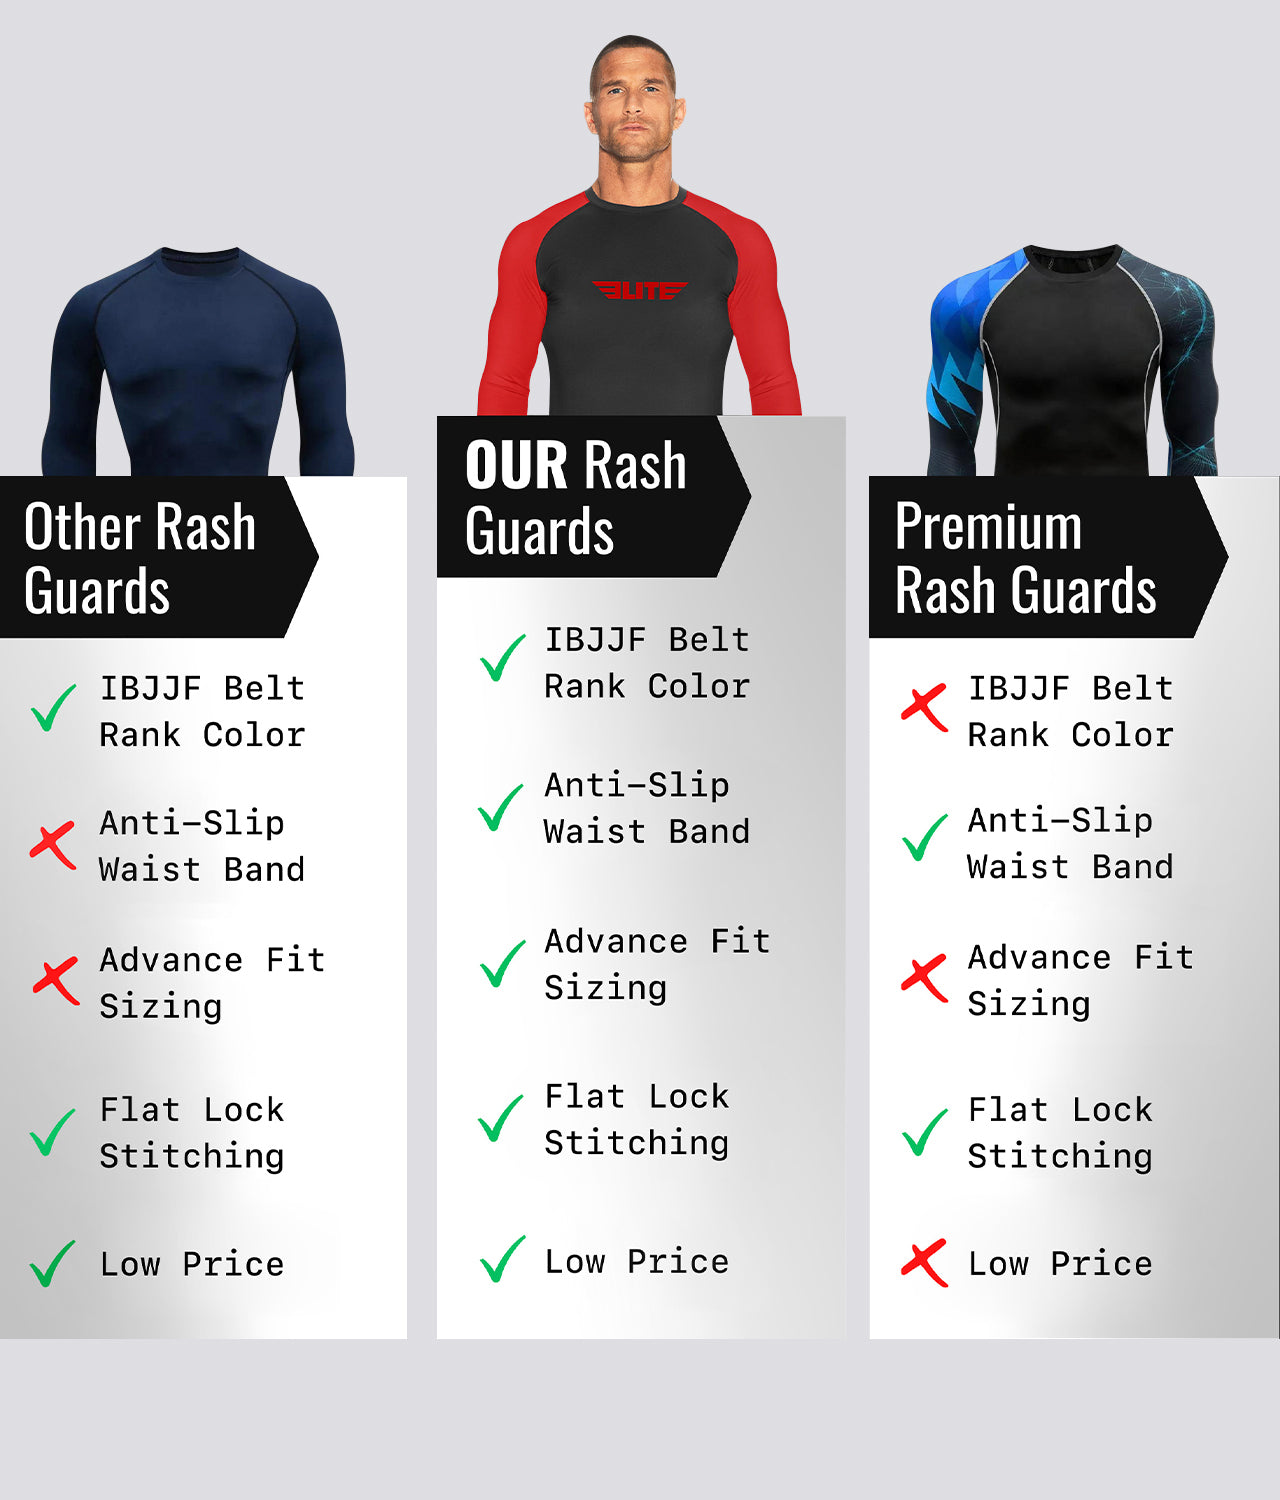 Elite Sports Men's Standard Red Long Sleeve Training Rash Guard Comparison